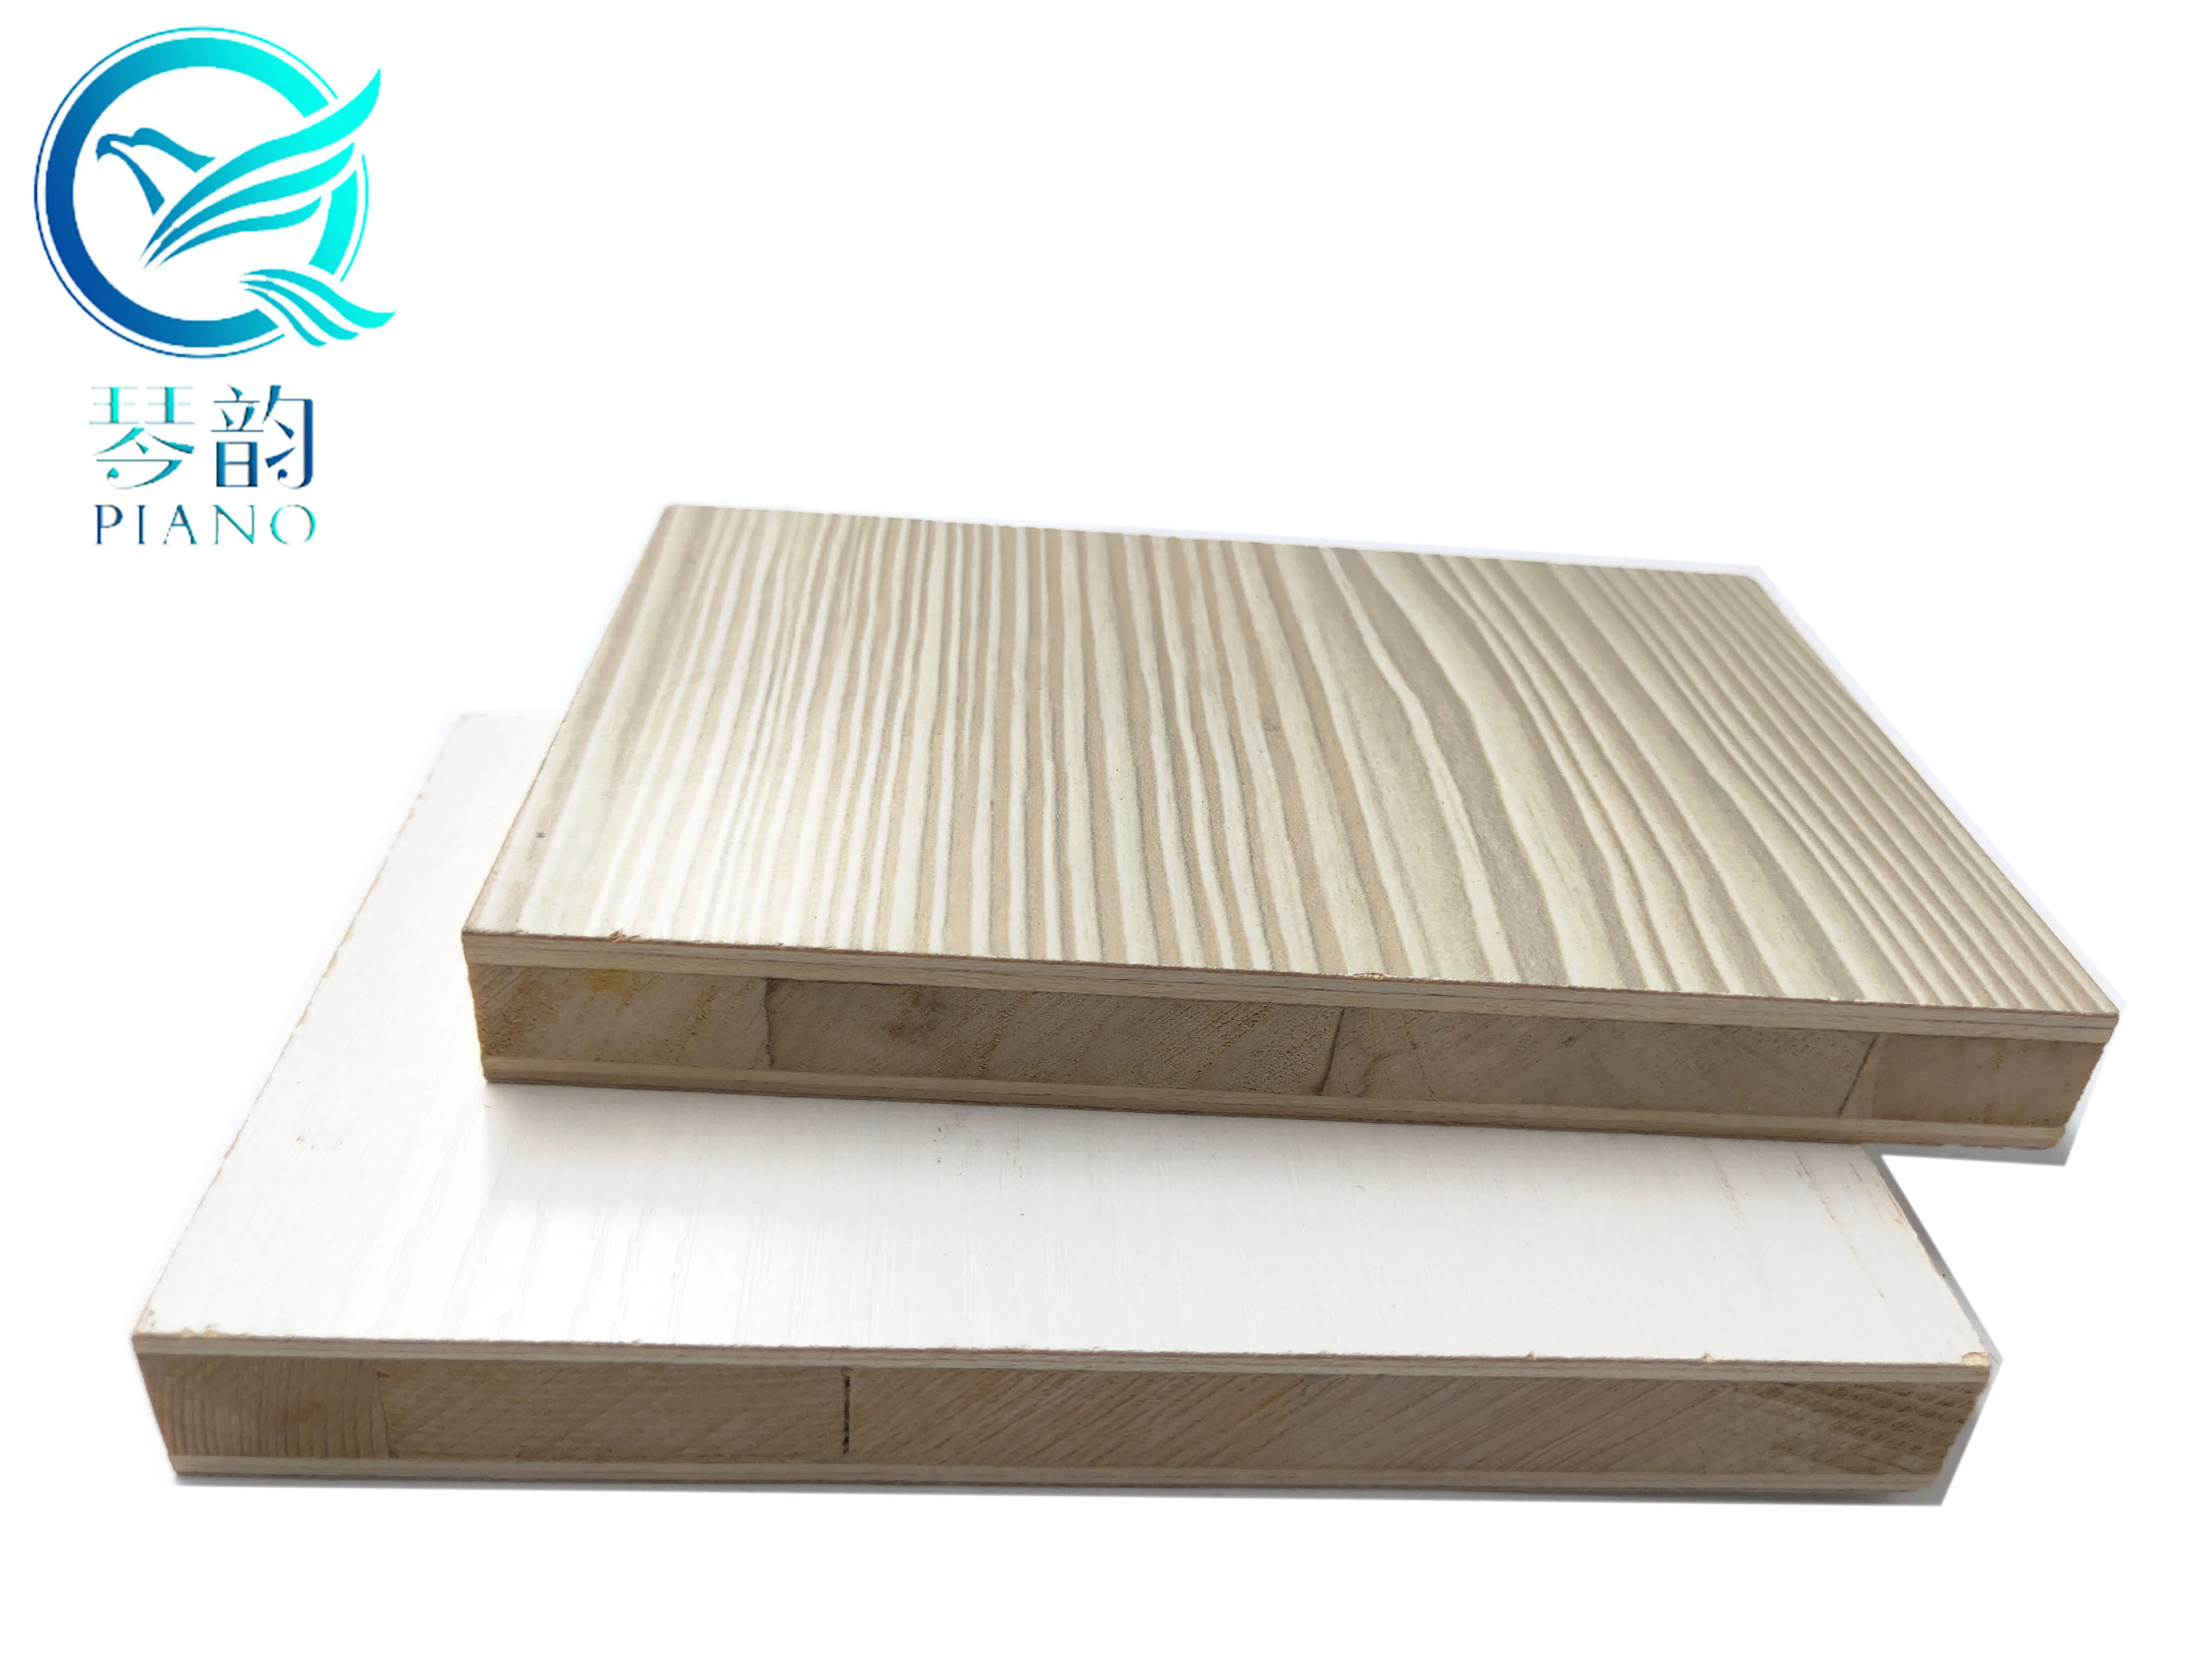 Piano 20mm E0 glue ultra brighten/matte/relief HPL overlaid surface concrete block board for wardrobes with fsc certificate